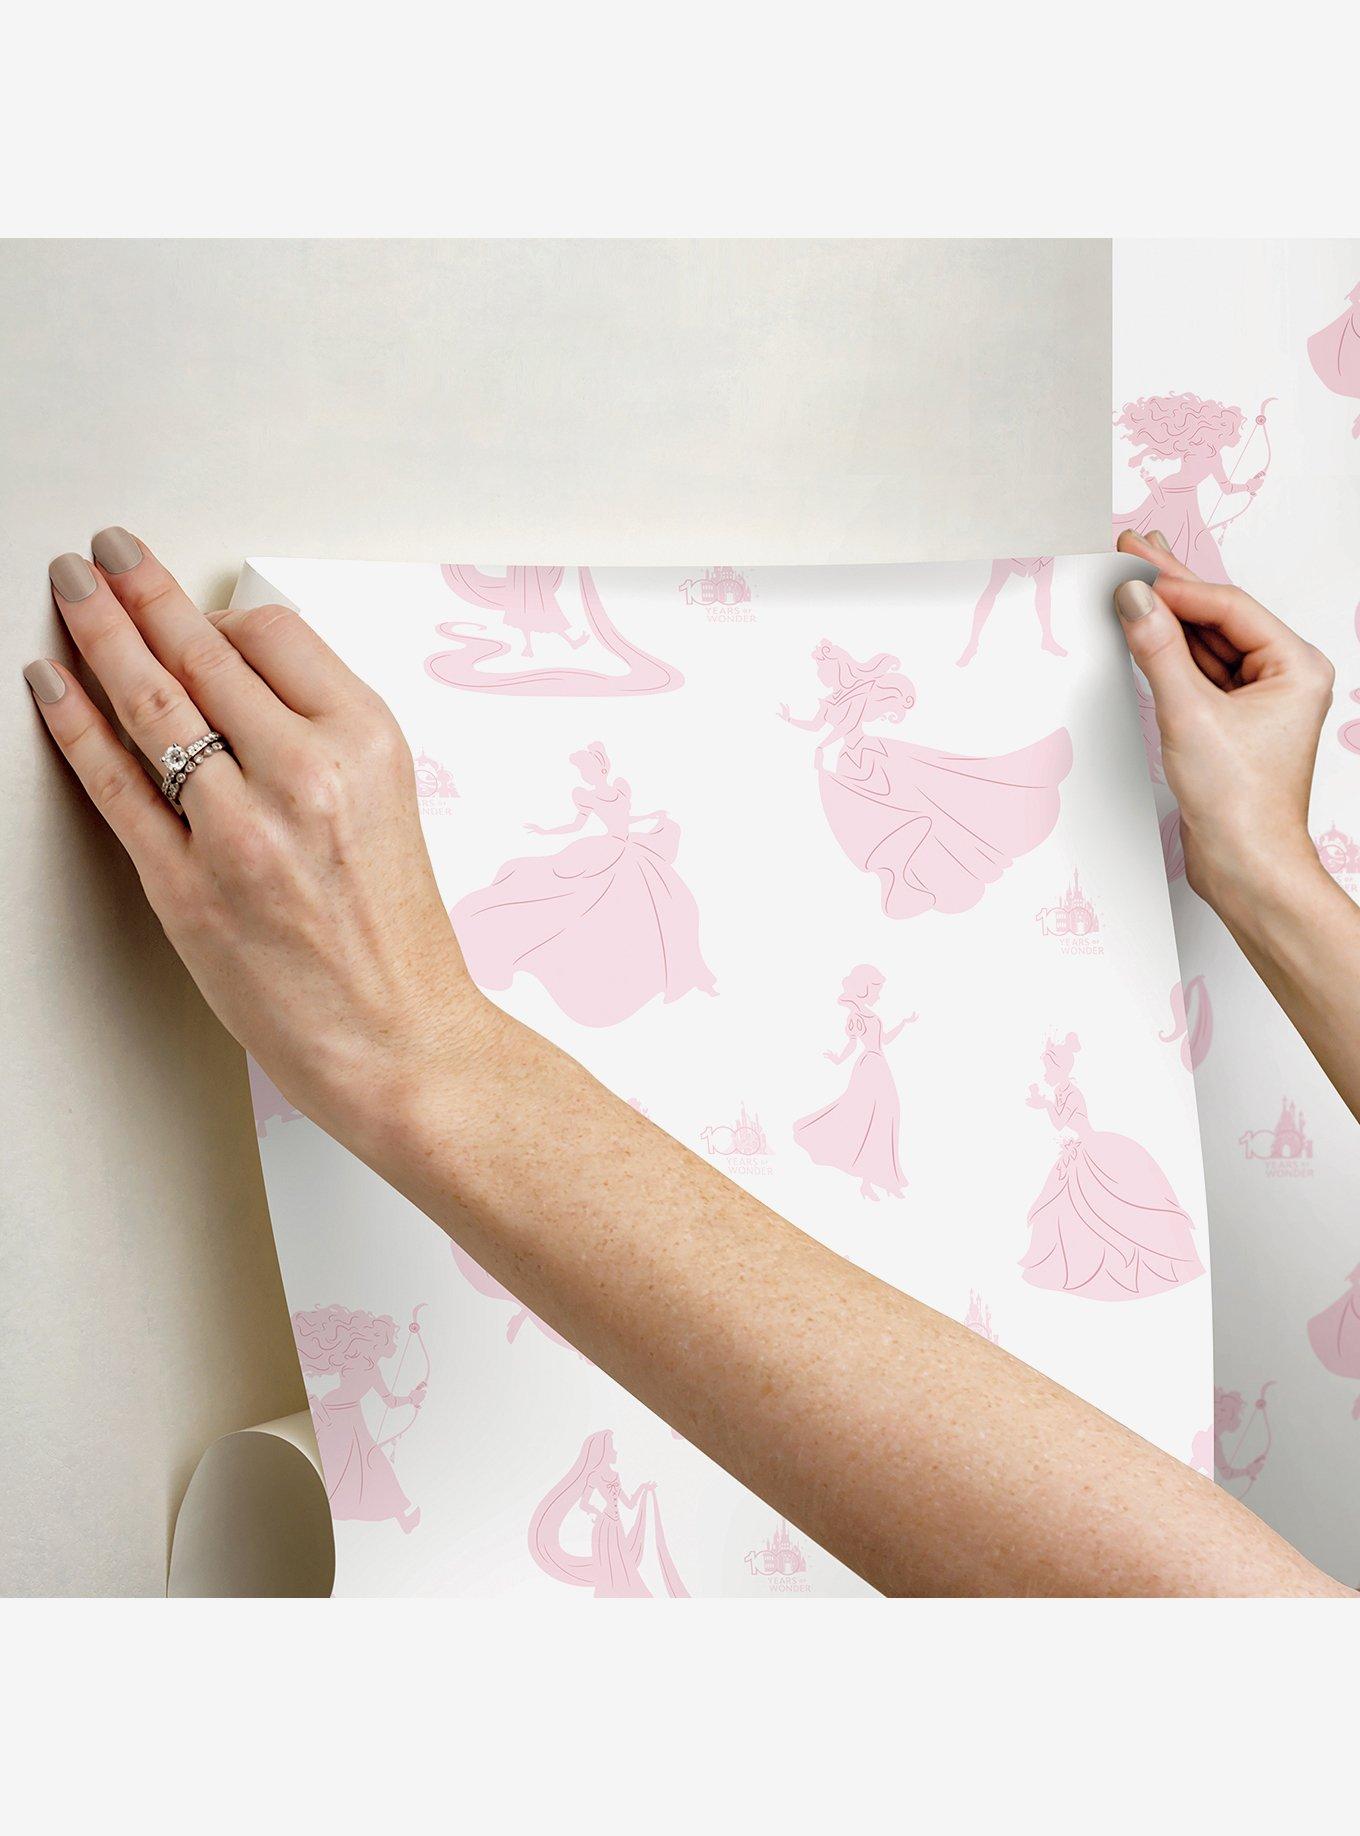 Disney100 Princesses Peel and Stick Wallpaper